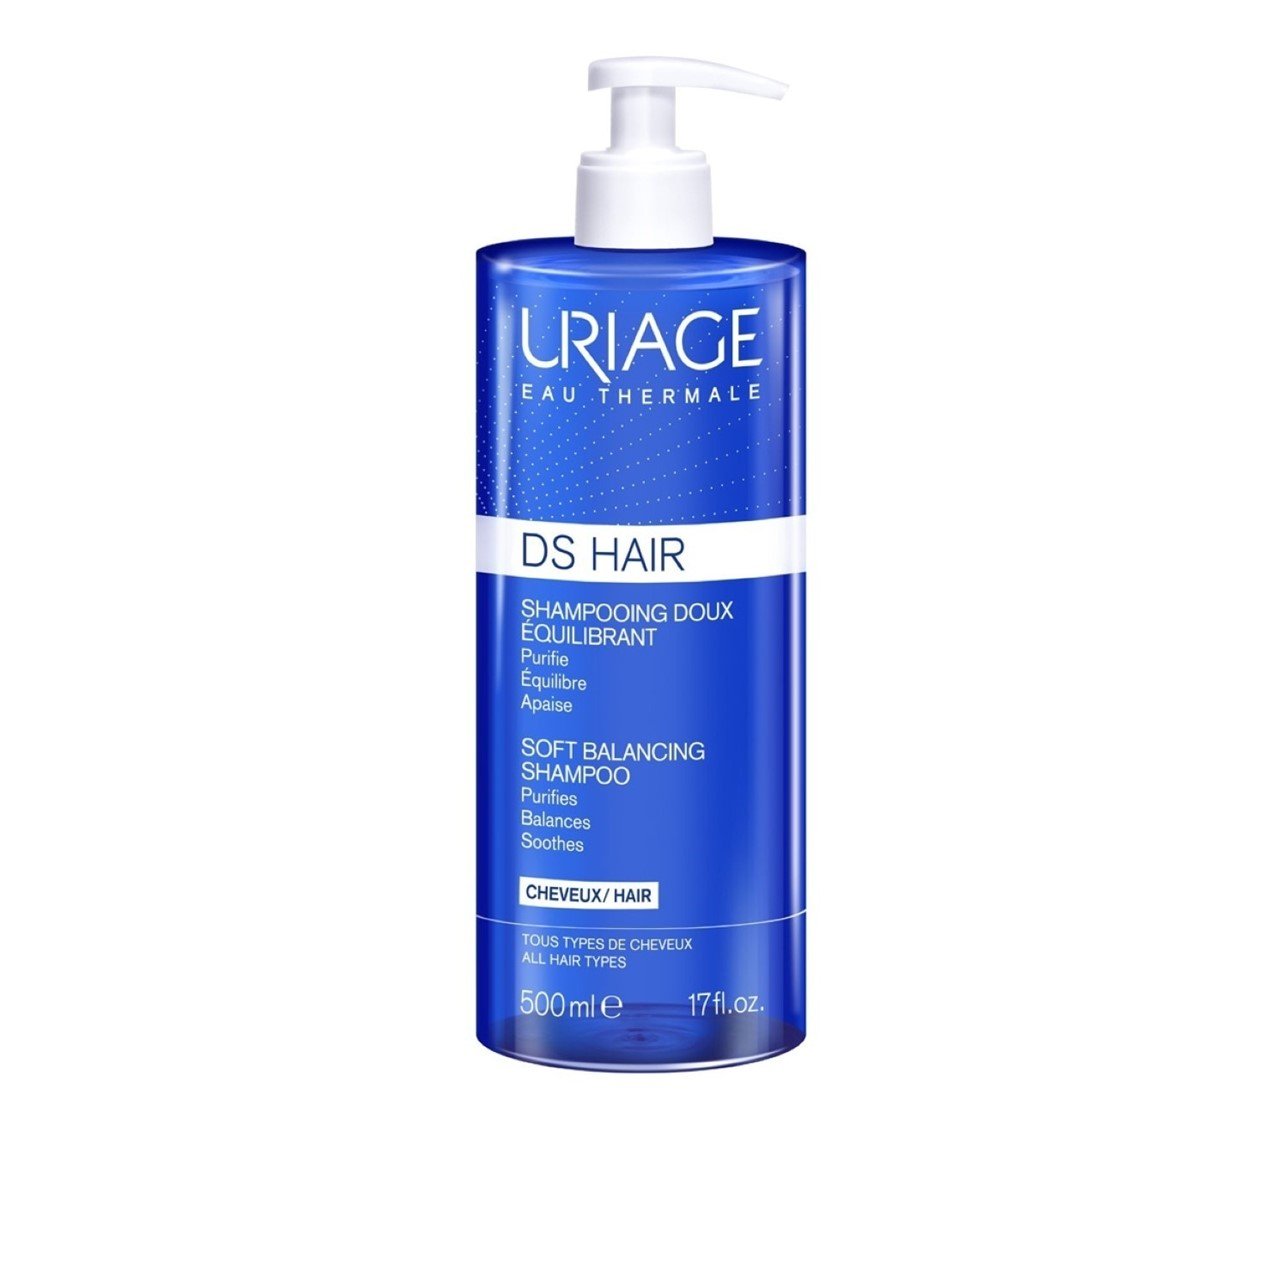 Uriage D.S. Hair Soft Balancing Shampoo 500ml